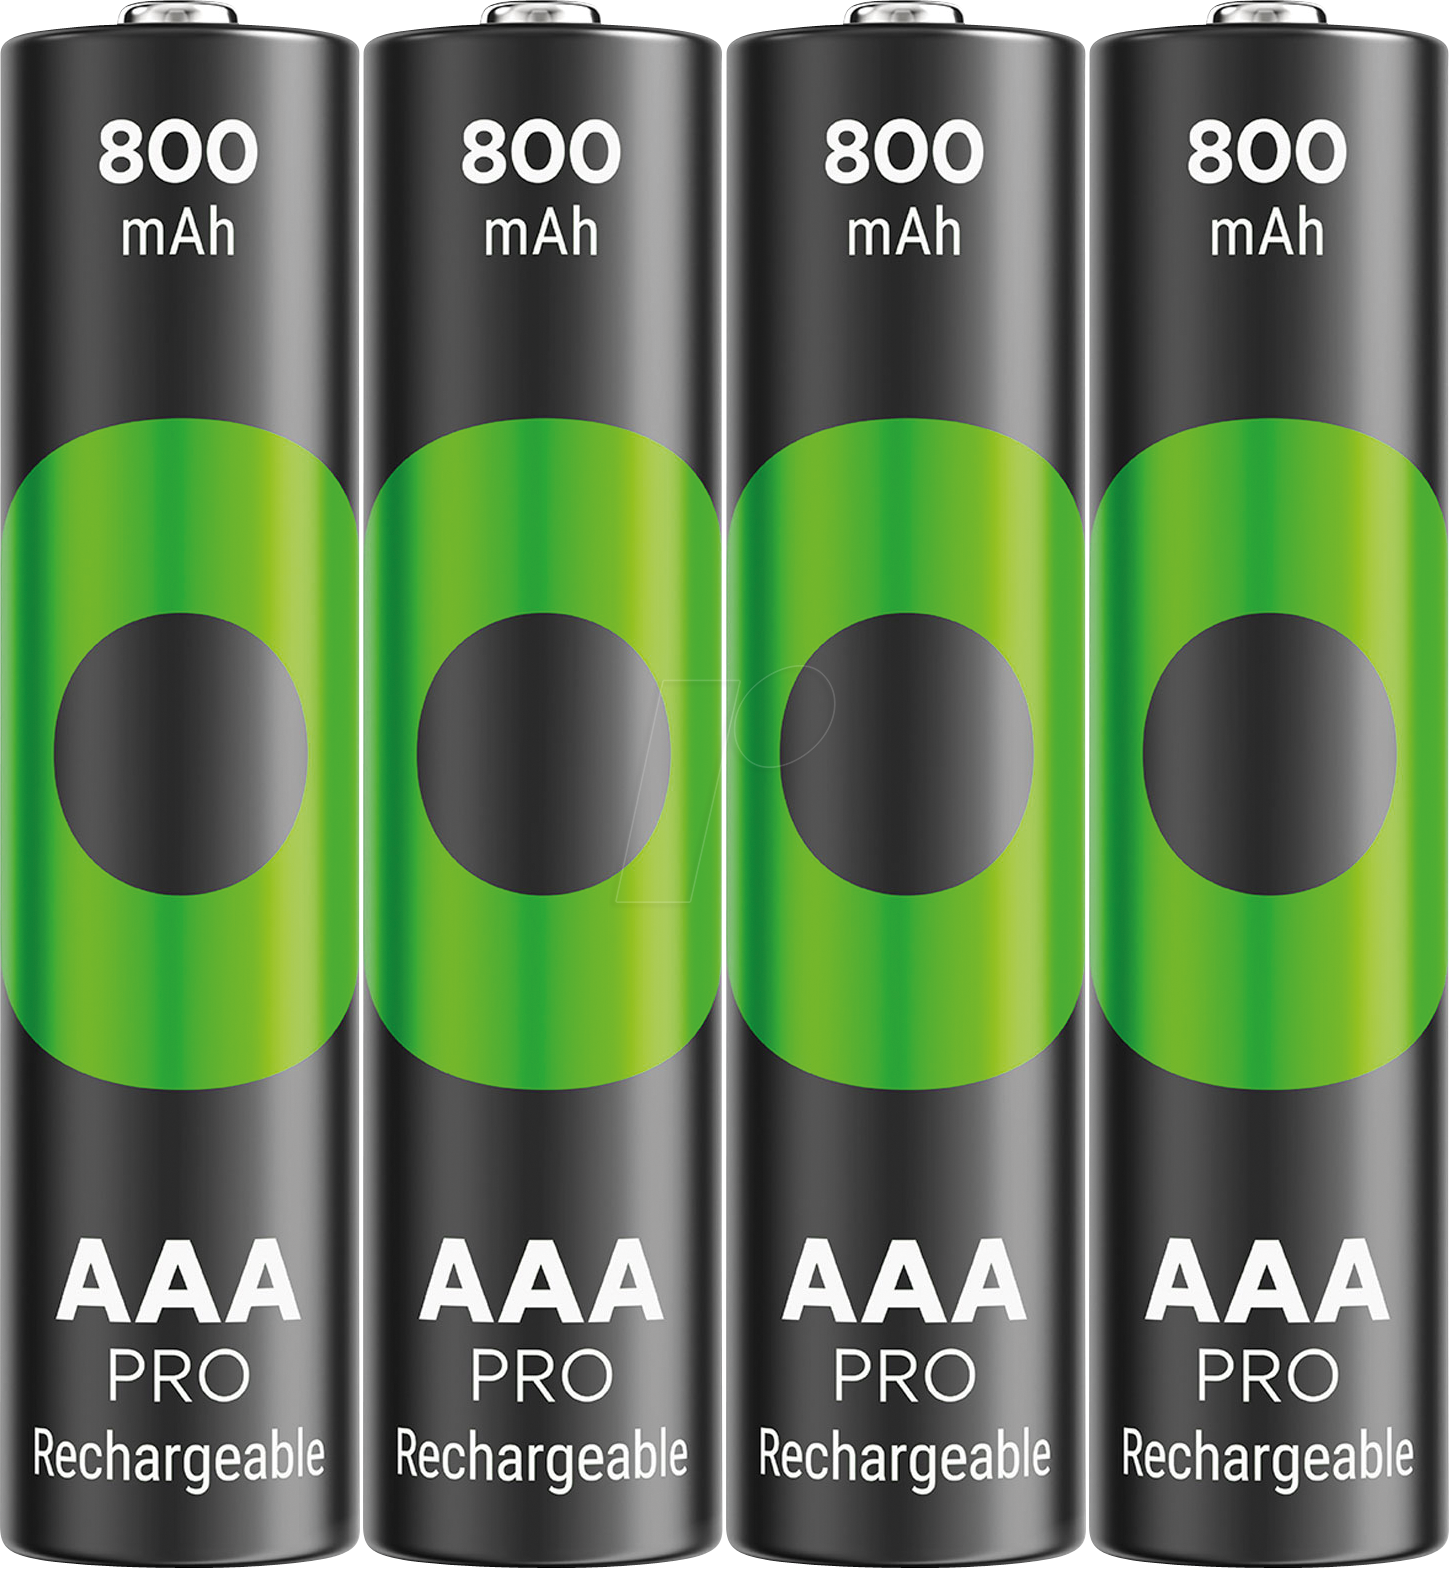 REC 800 4AAA PRO - ReCyko PRO, NiMh-Akku, AAA (Micro), 800 mAh, 4er-Pack von GP-BATTERIES